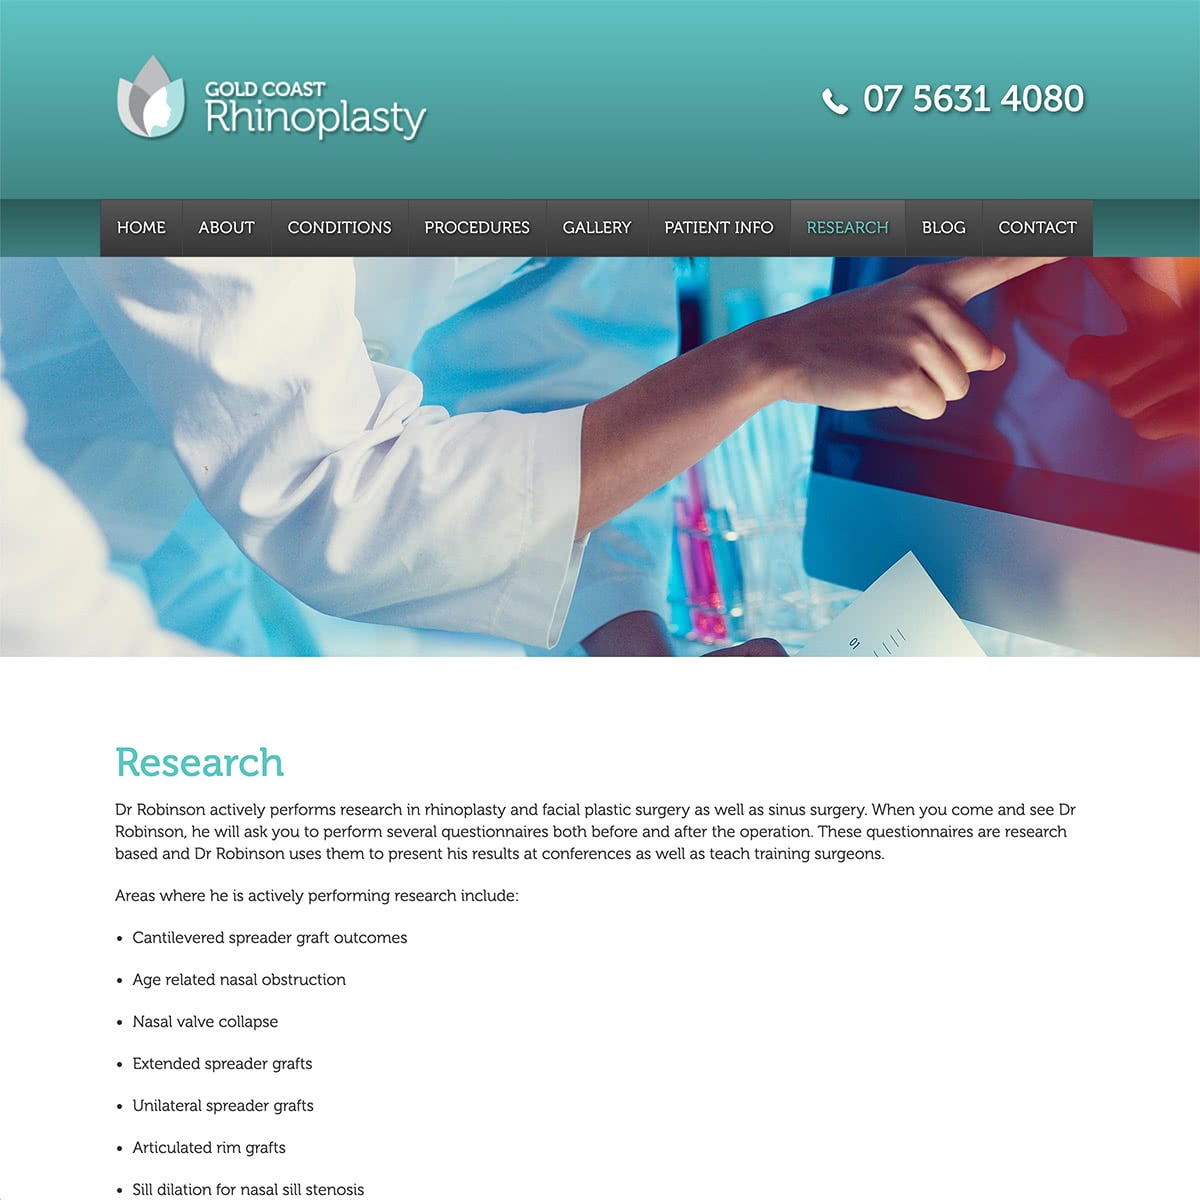 Gold Coast Rhinoplasty - Research